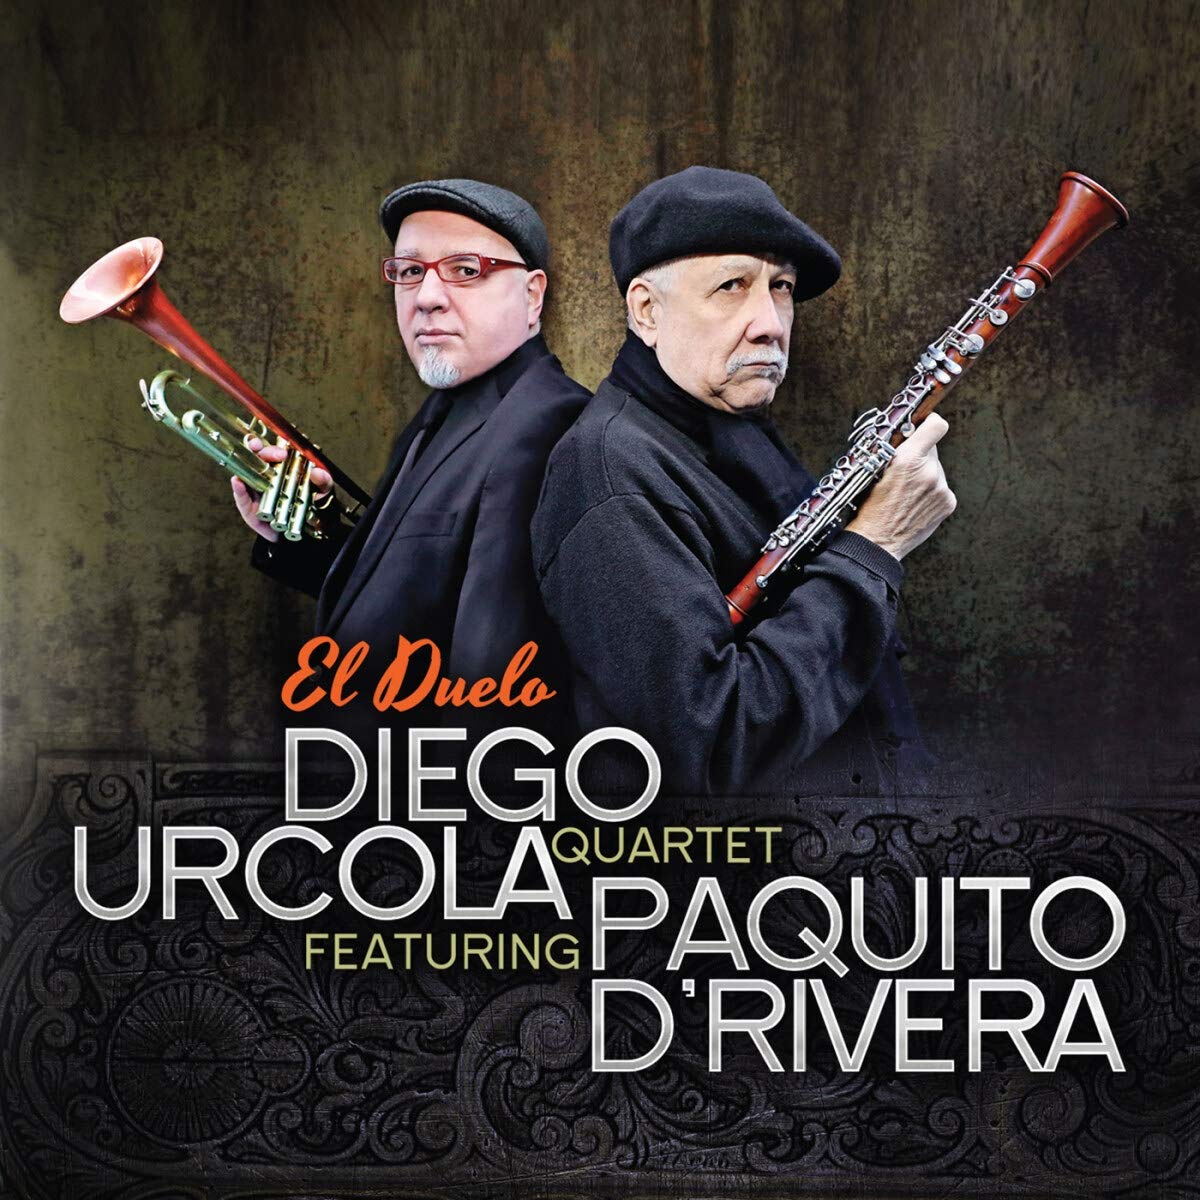 DIEGO URCOLA - Diego Urcola Quartet Featuring Paquito D’Rivera : El Duelo cover 